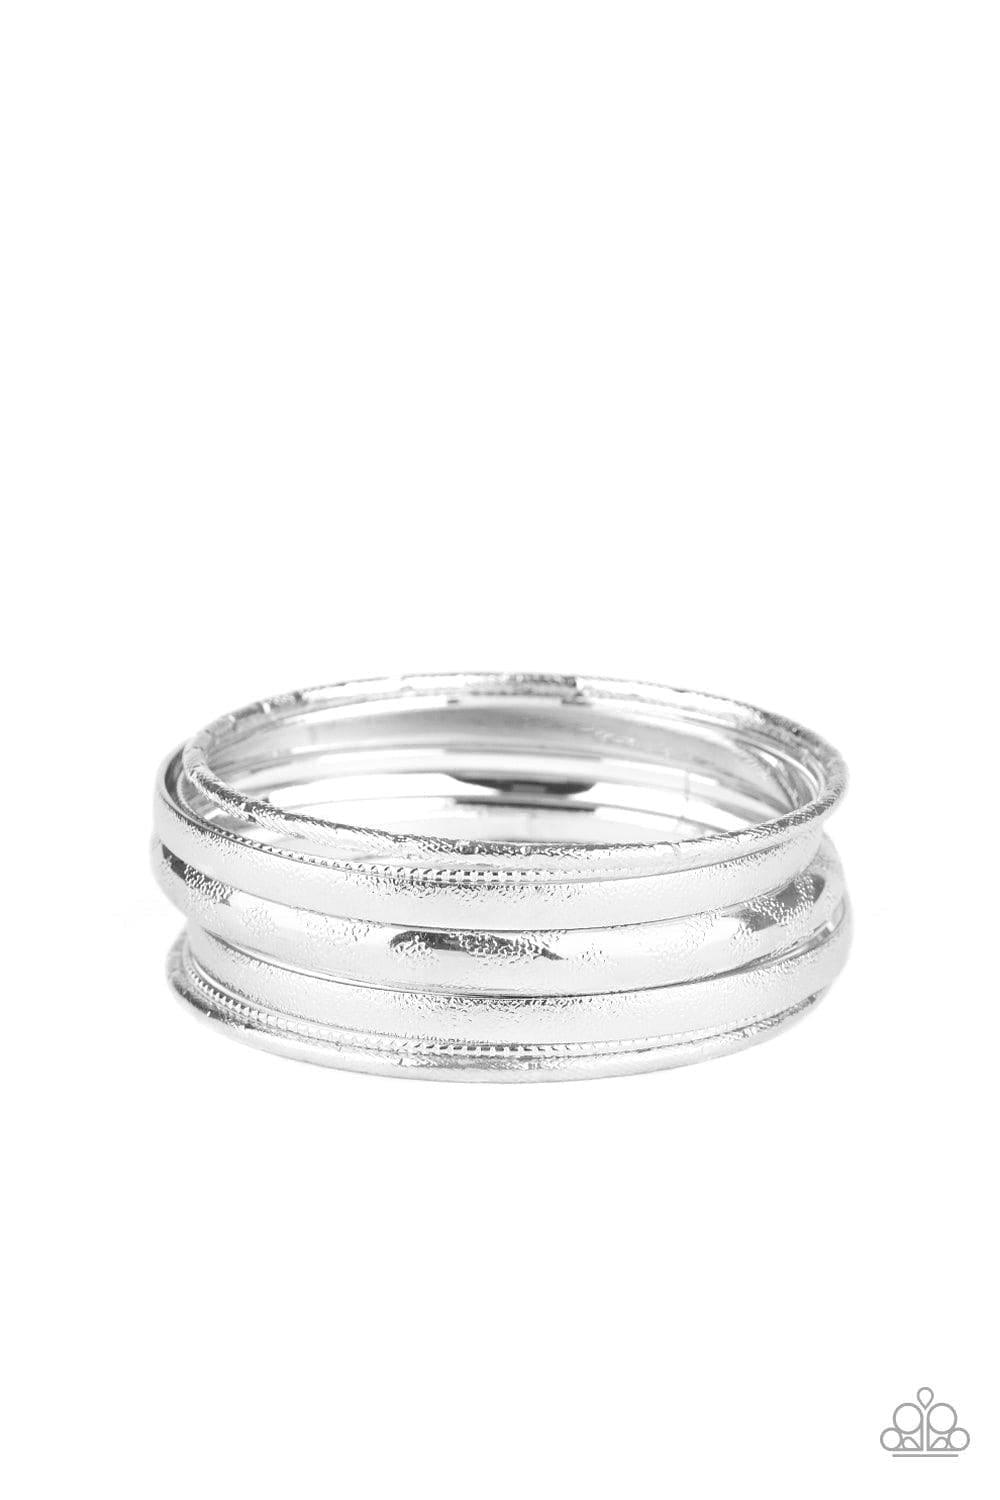 Paparazzi Accessories - Basic Bauble - Silver Bracelet - Bling by JessieK